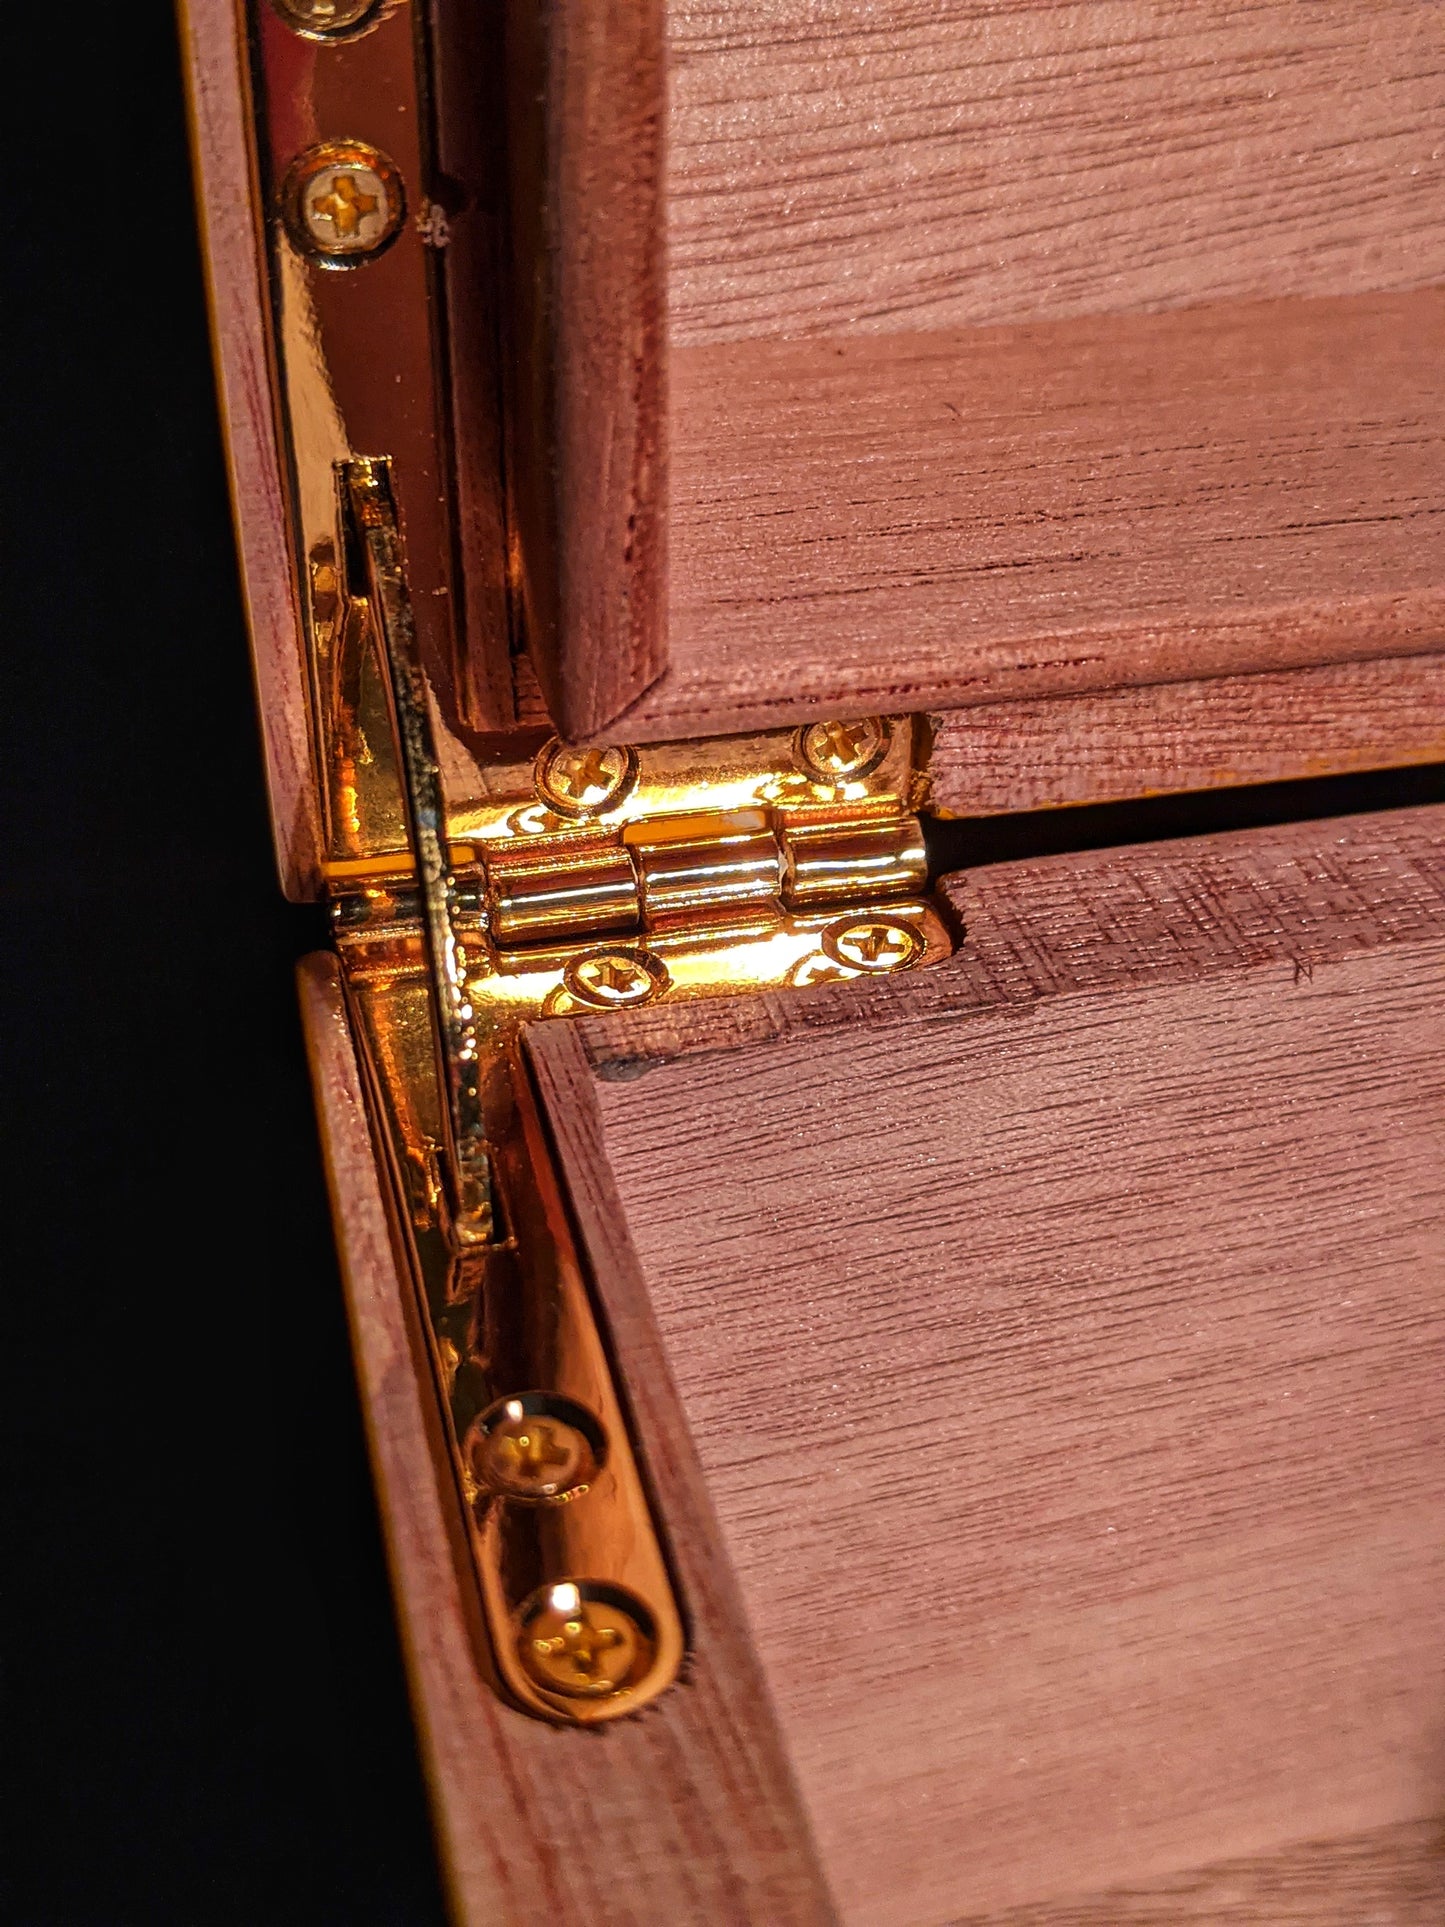 Cohiba Black & Gold Leather & wood Cigar Case holds 3 Large cigars & Humidor new